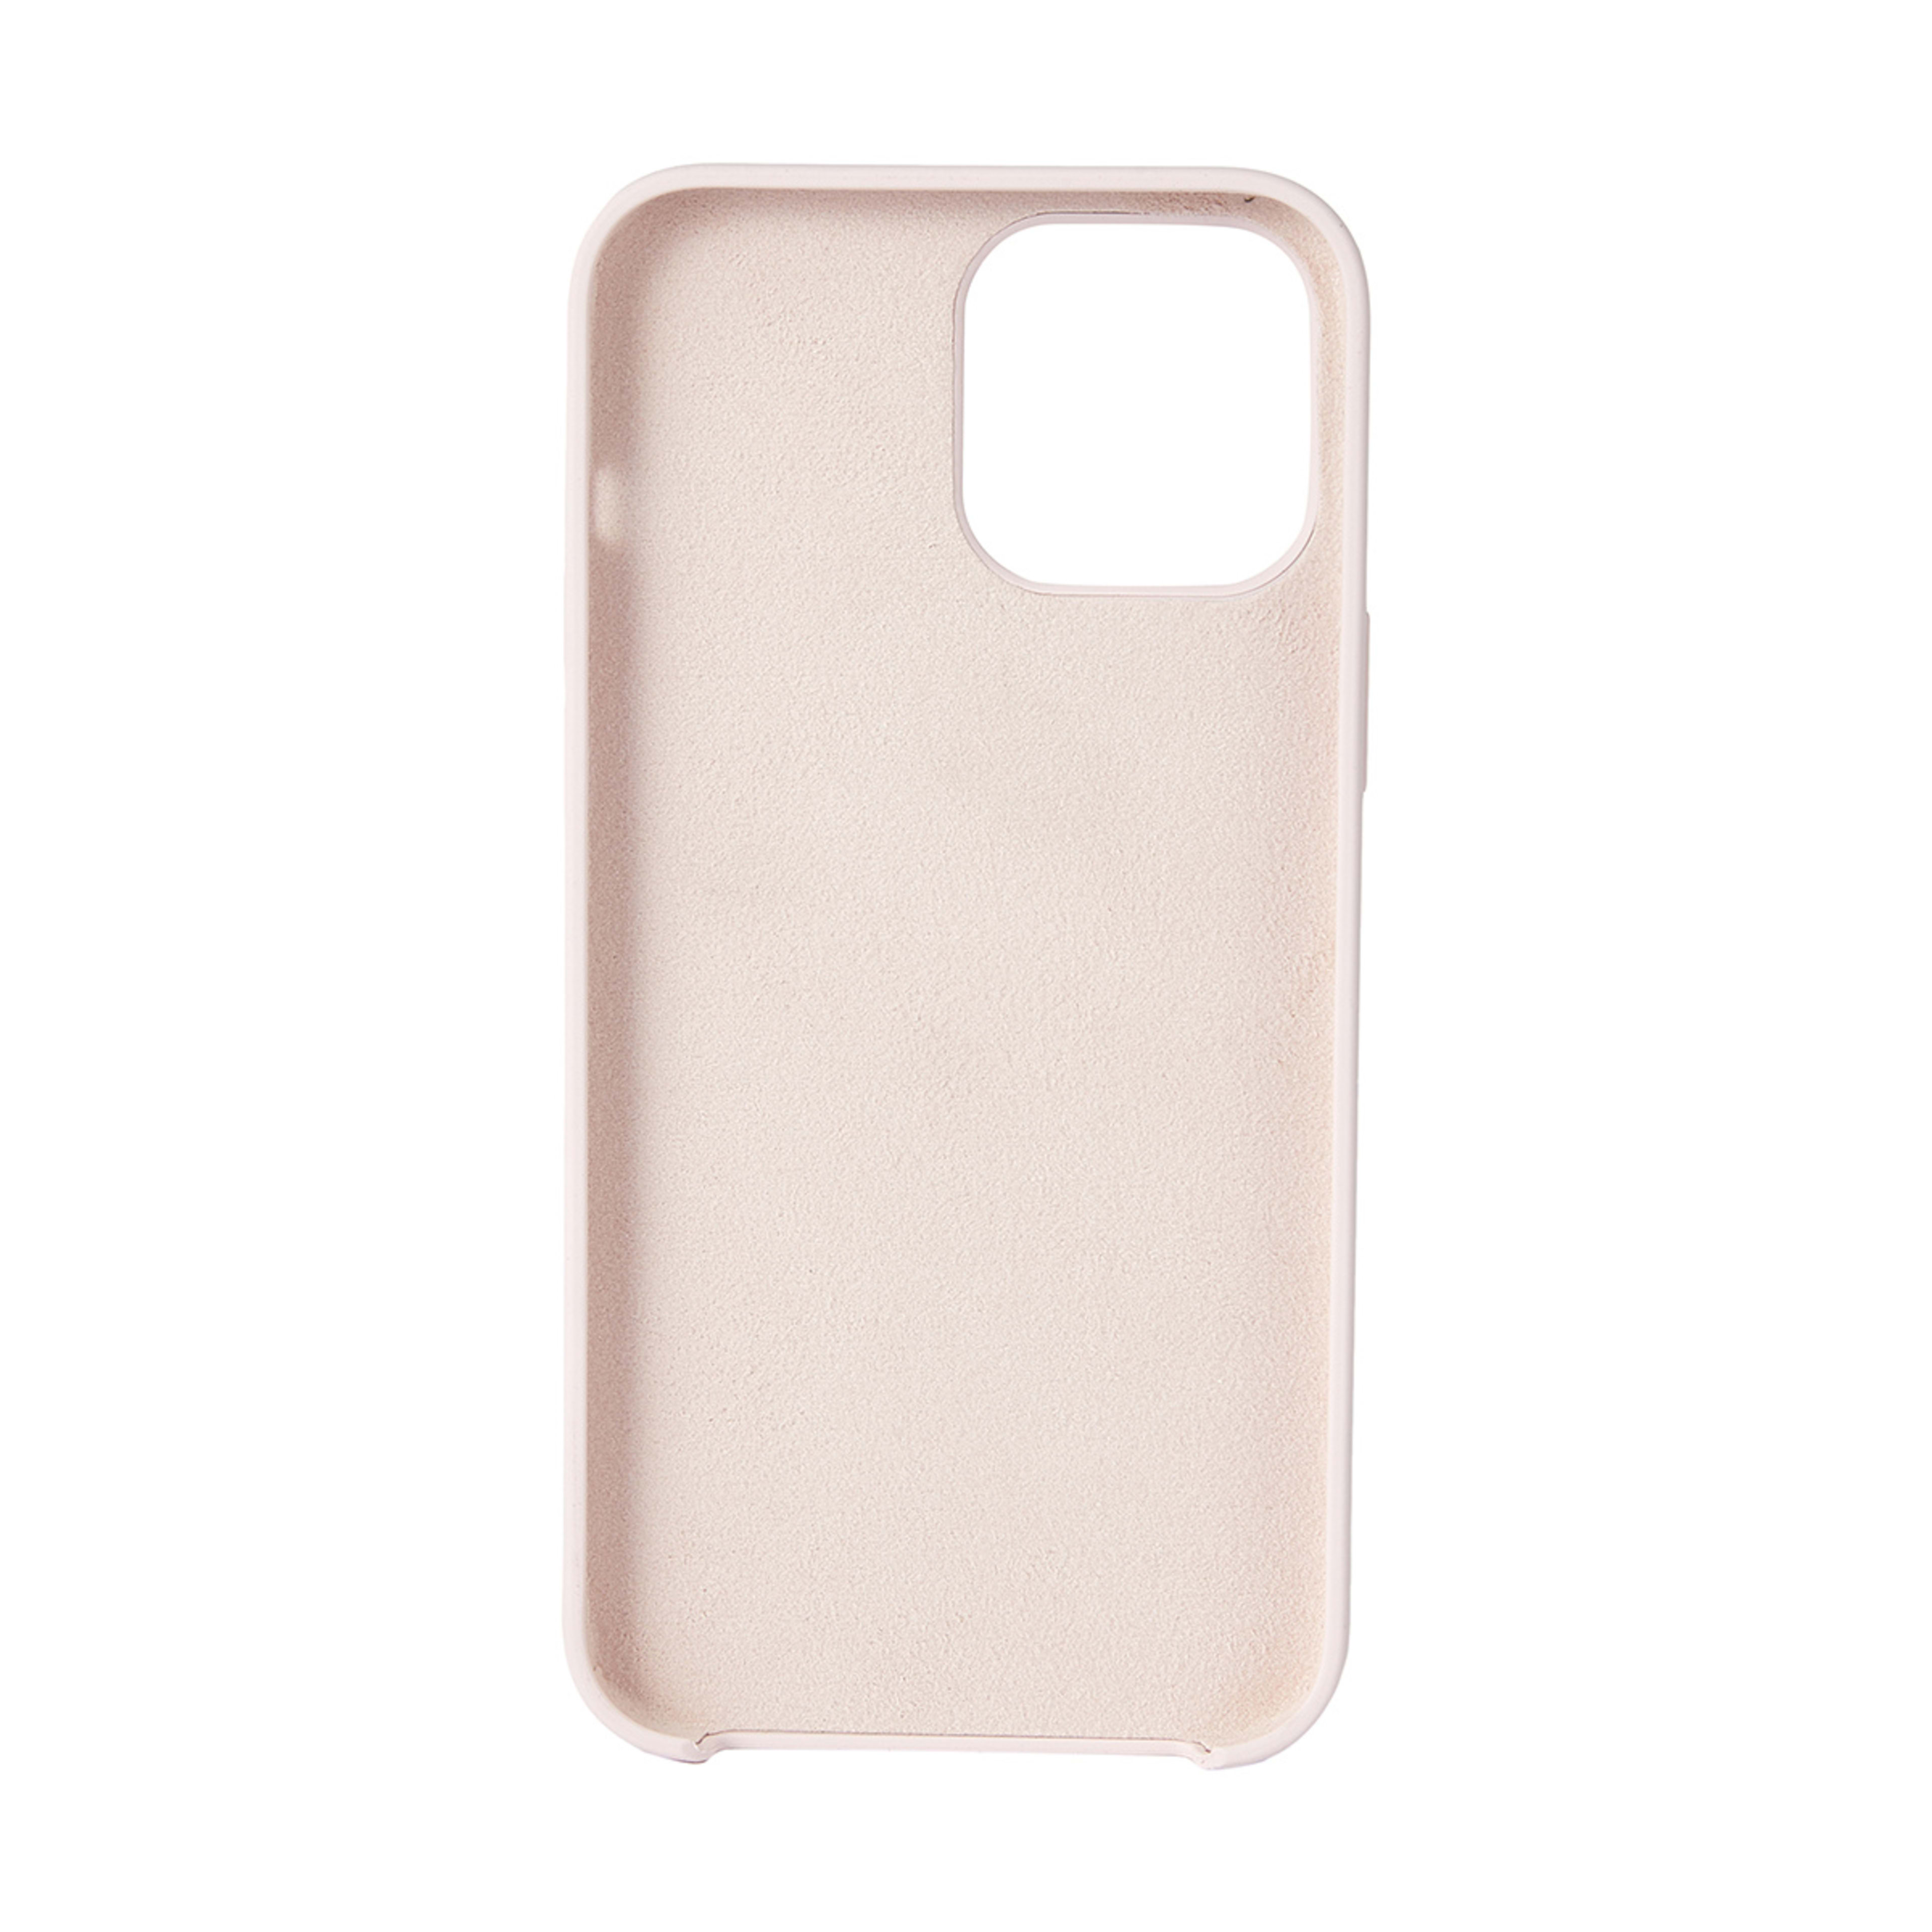 iPhone 13 Pro Max Silicone Case - Blush - Kmart